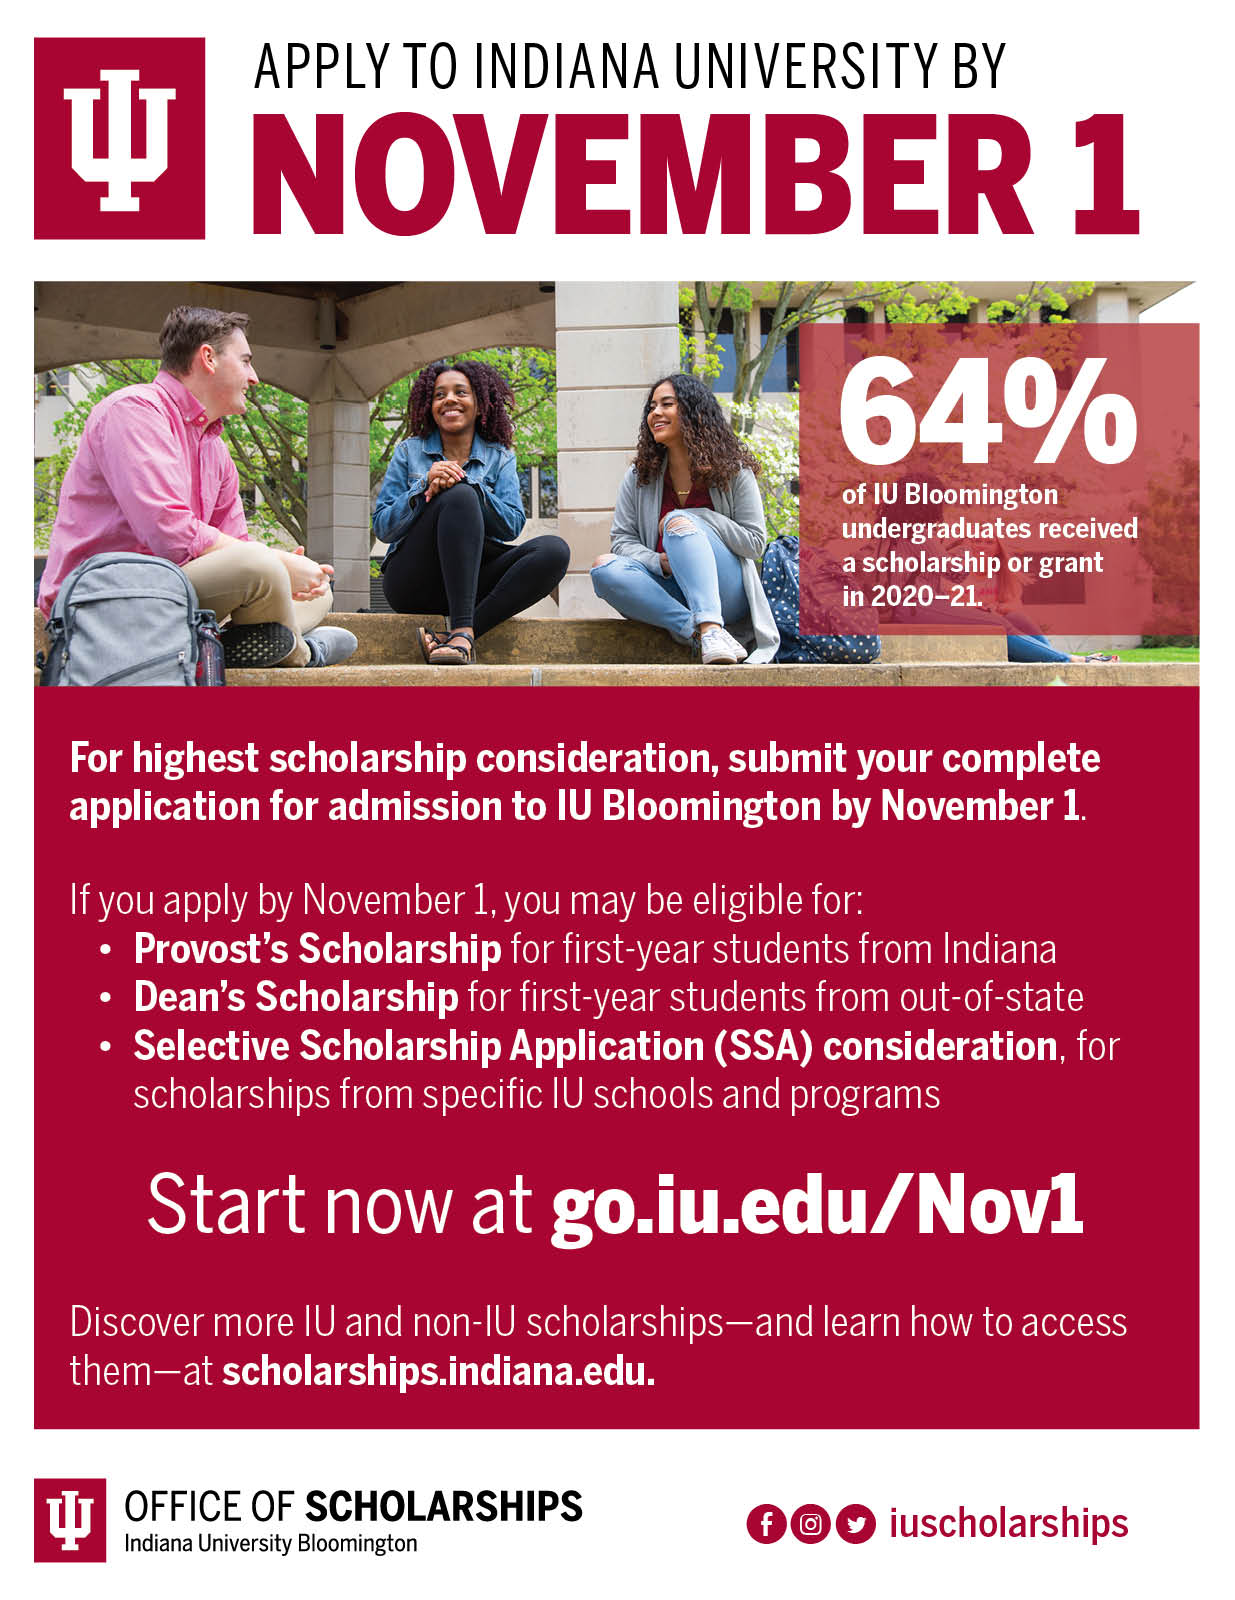 Apply to Indiana University by November 1st.